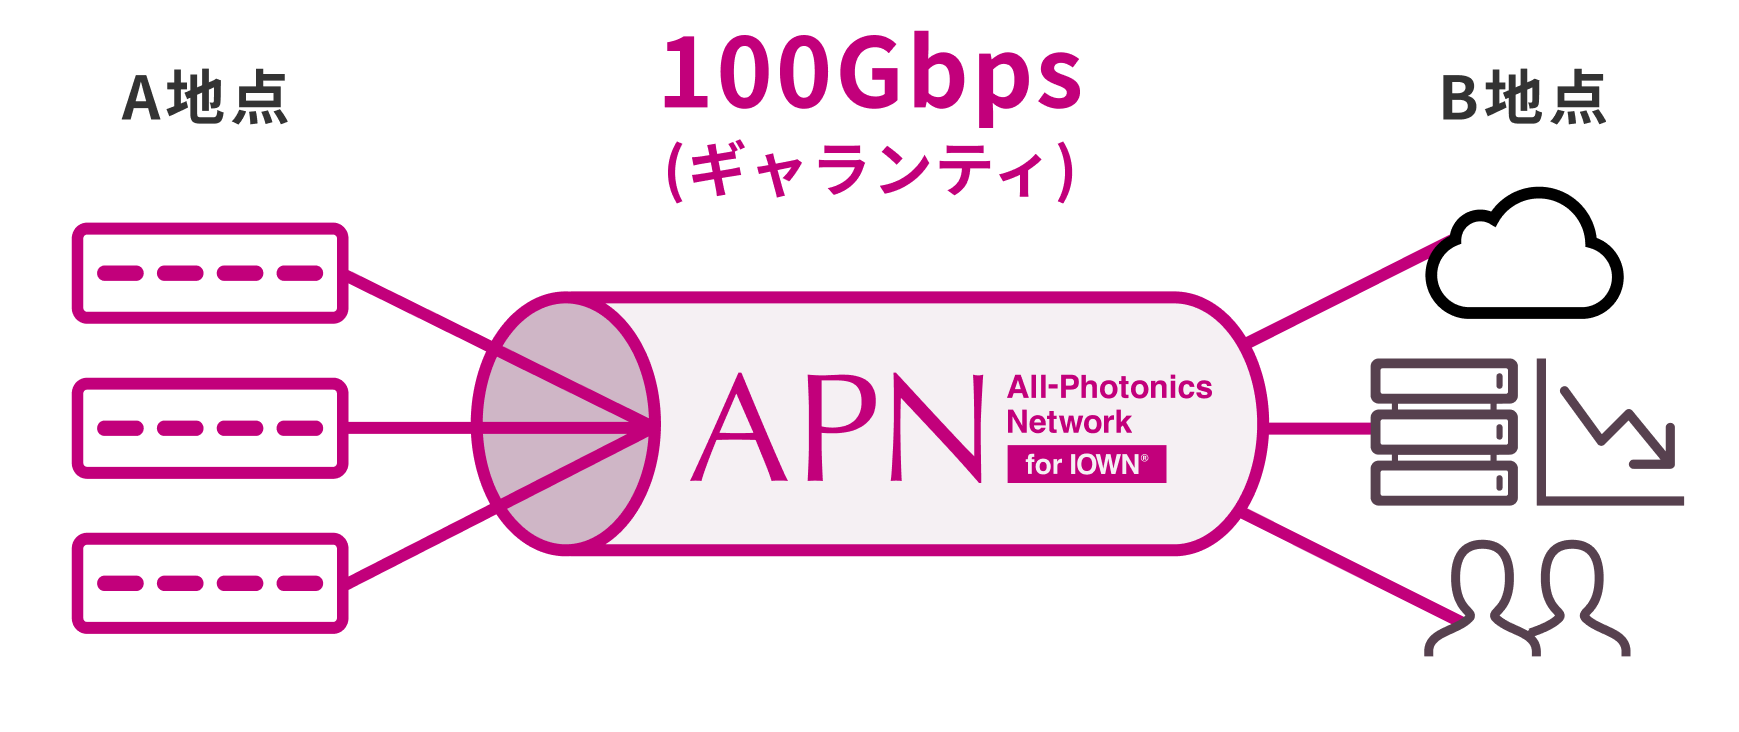 APN for IOWNは高速・大容量